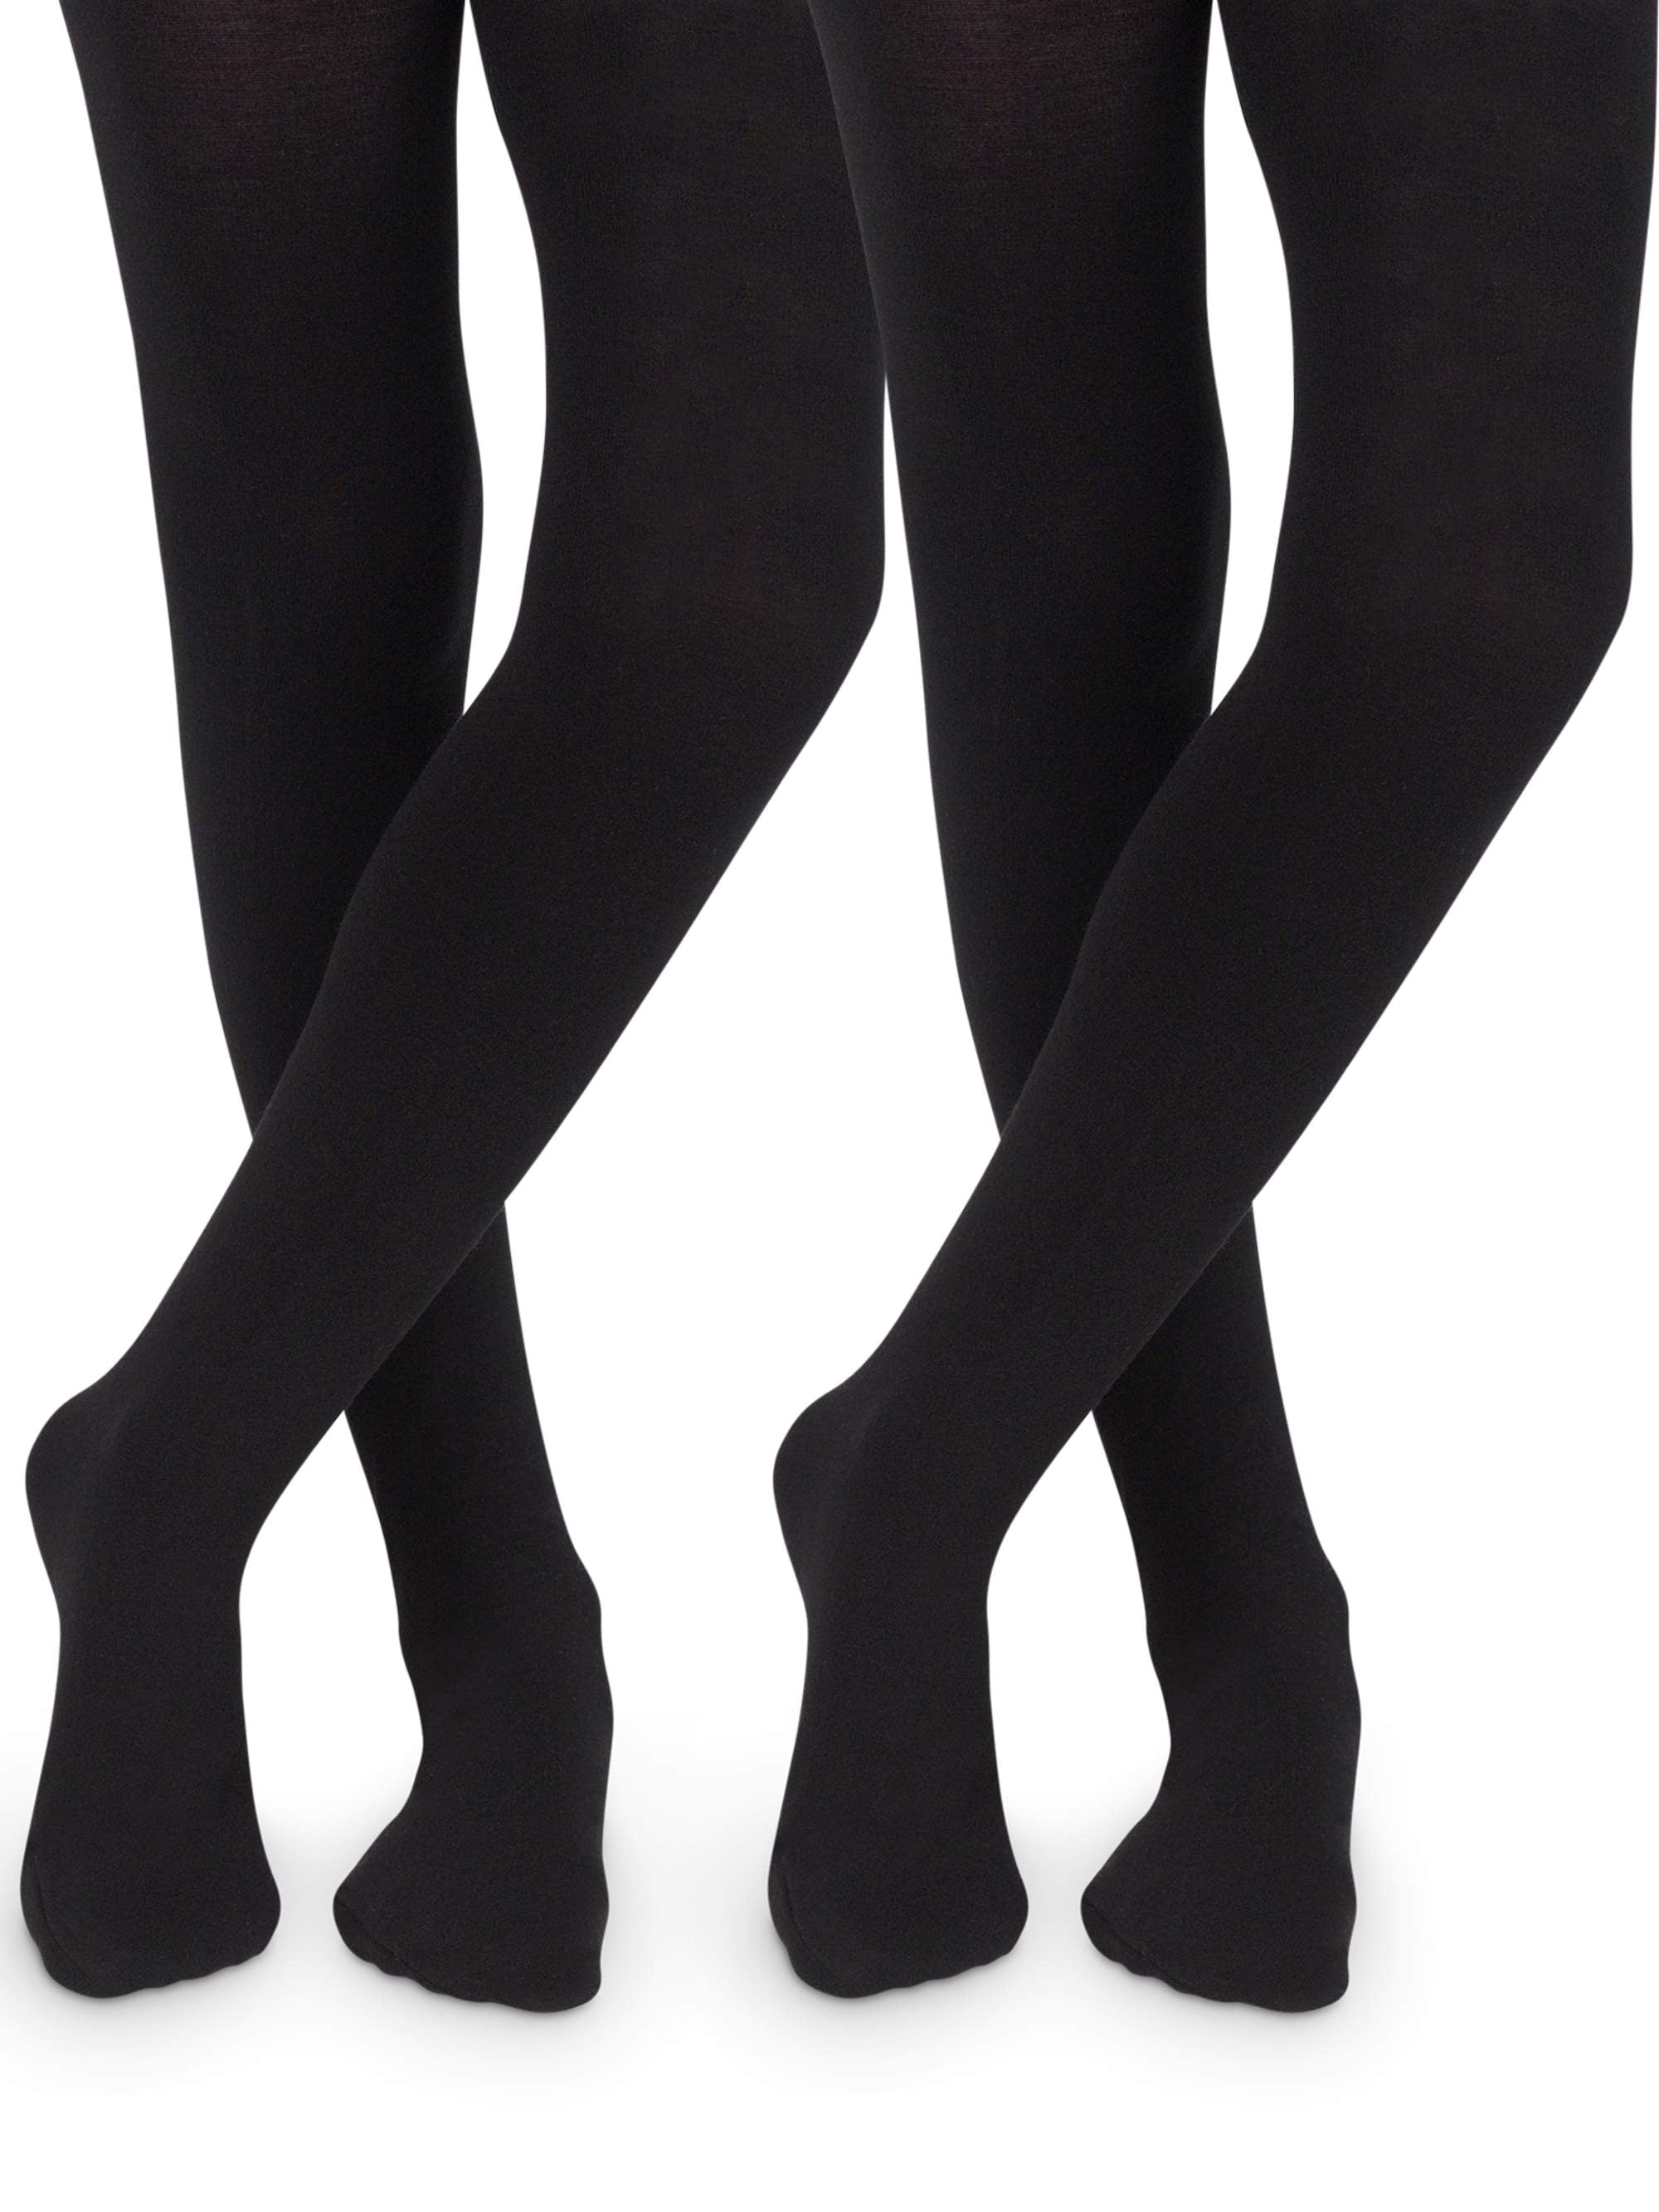 Girls Tights Cotton Thick School Uniform Stockings Black 